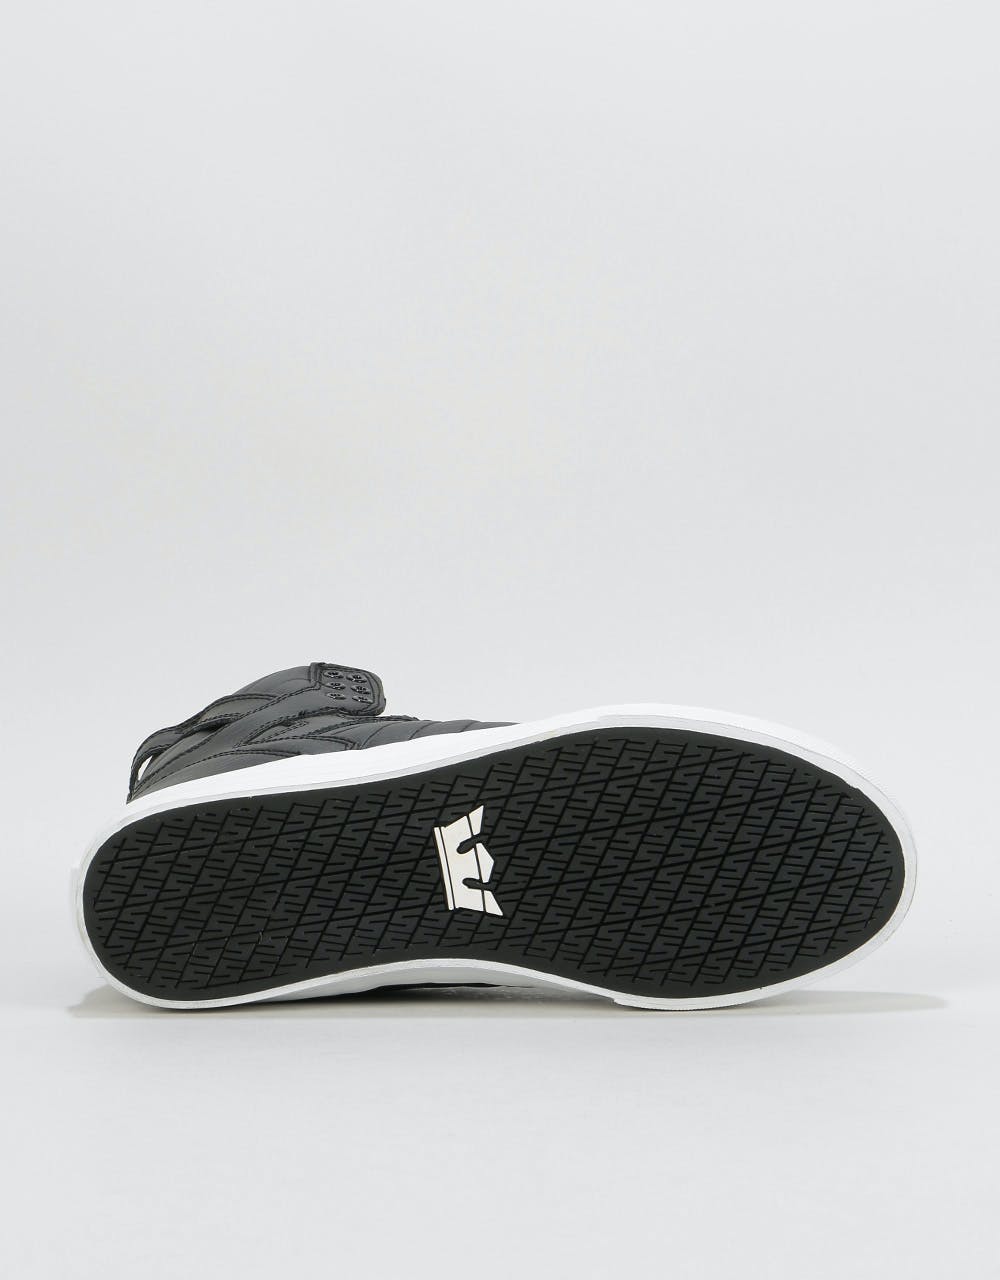 Supra Skytop Skate Shoes - Black/White